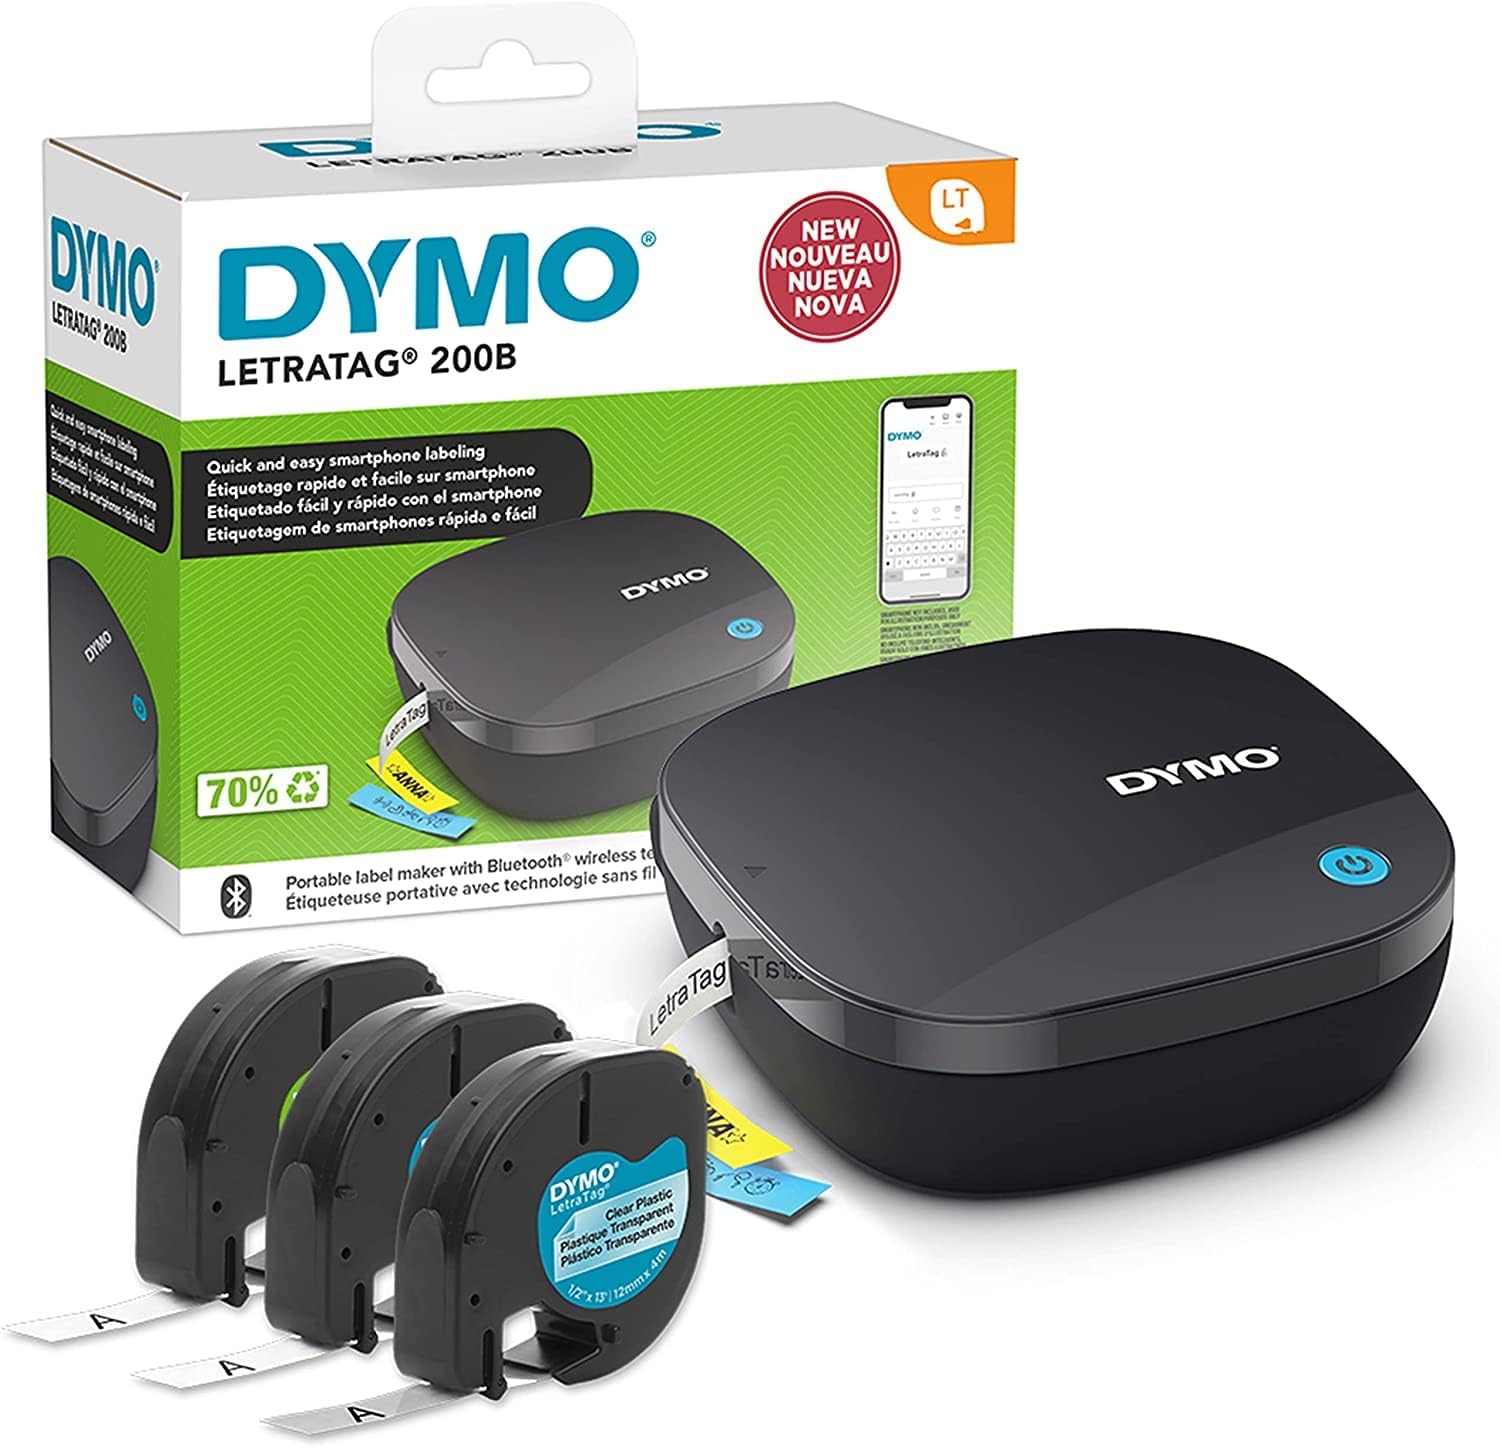 DYMO LetraTag 200B Bluetooth Label Maker Review